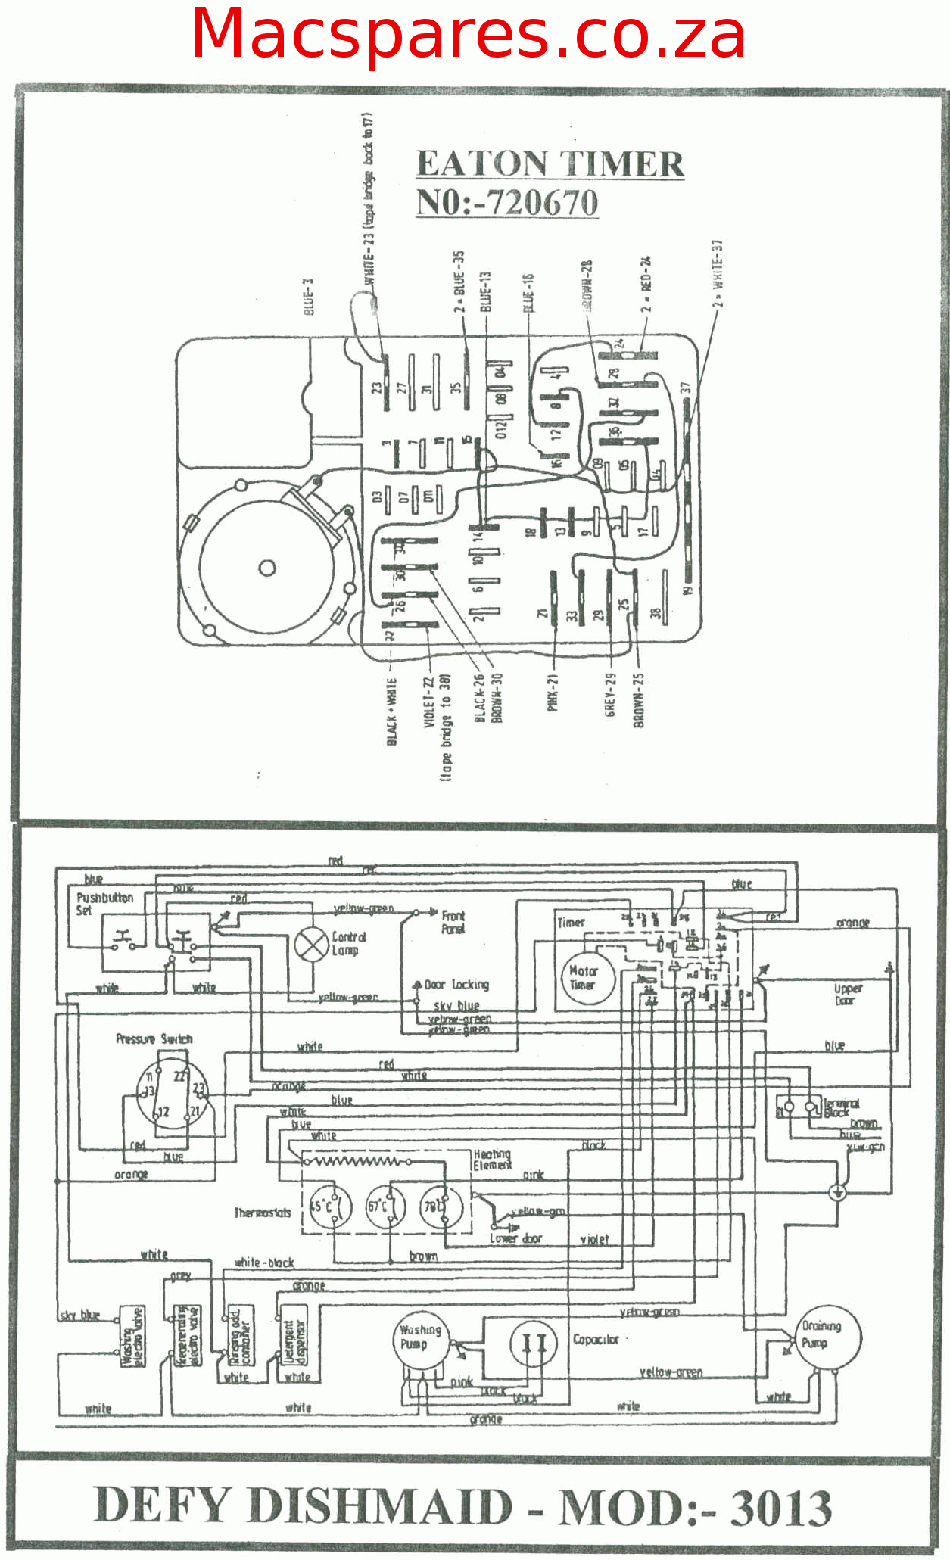 Wiring Diagram : Dishwashers : Macspares | Wholesale Spare Parts - Dishwasher Wiring Diagram